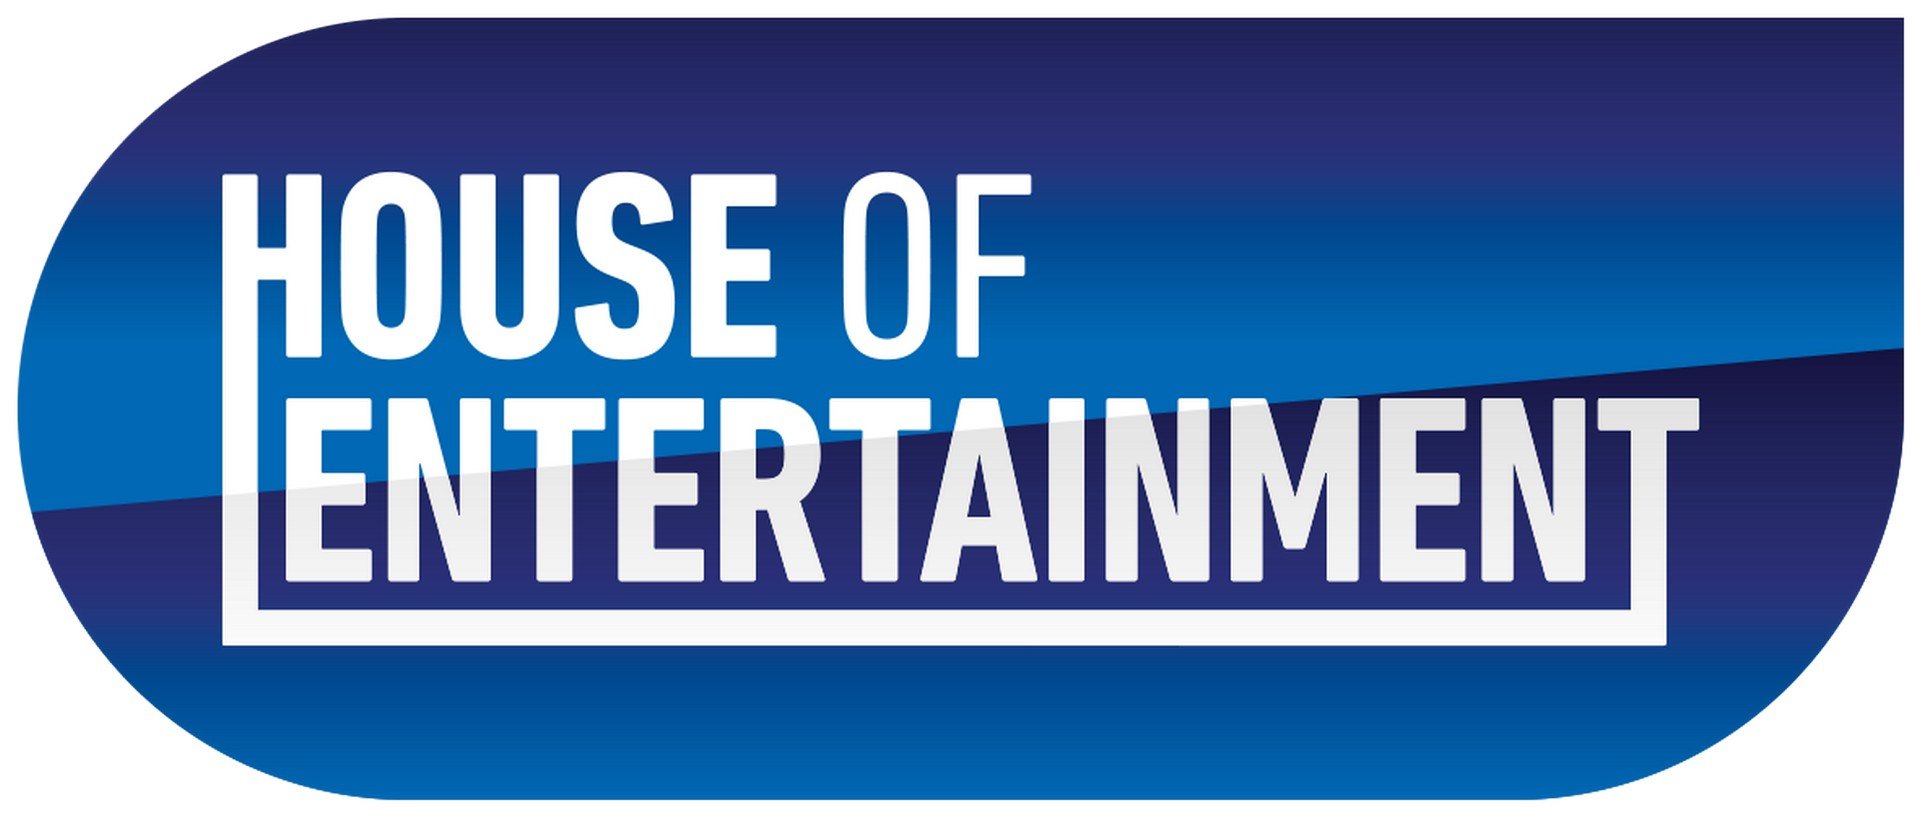 Katrin (Kat) Kerkhofs onder exclusief management bij House of Entertainment - Logo House Of Entertainment